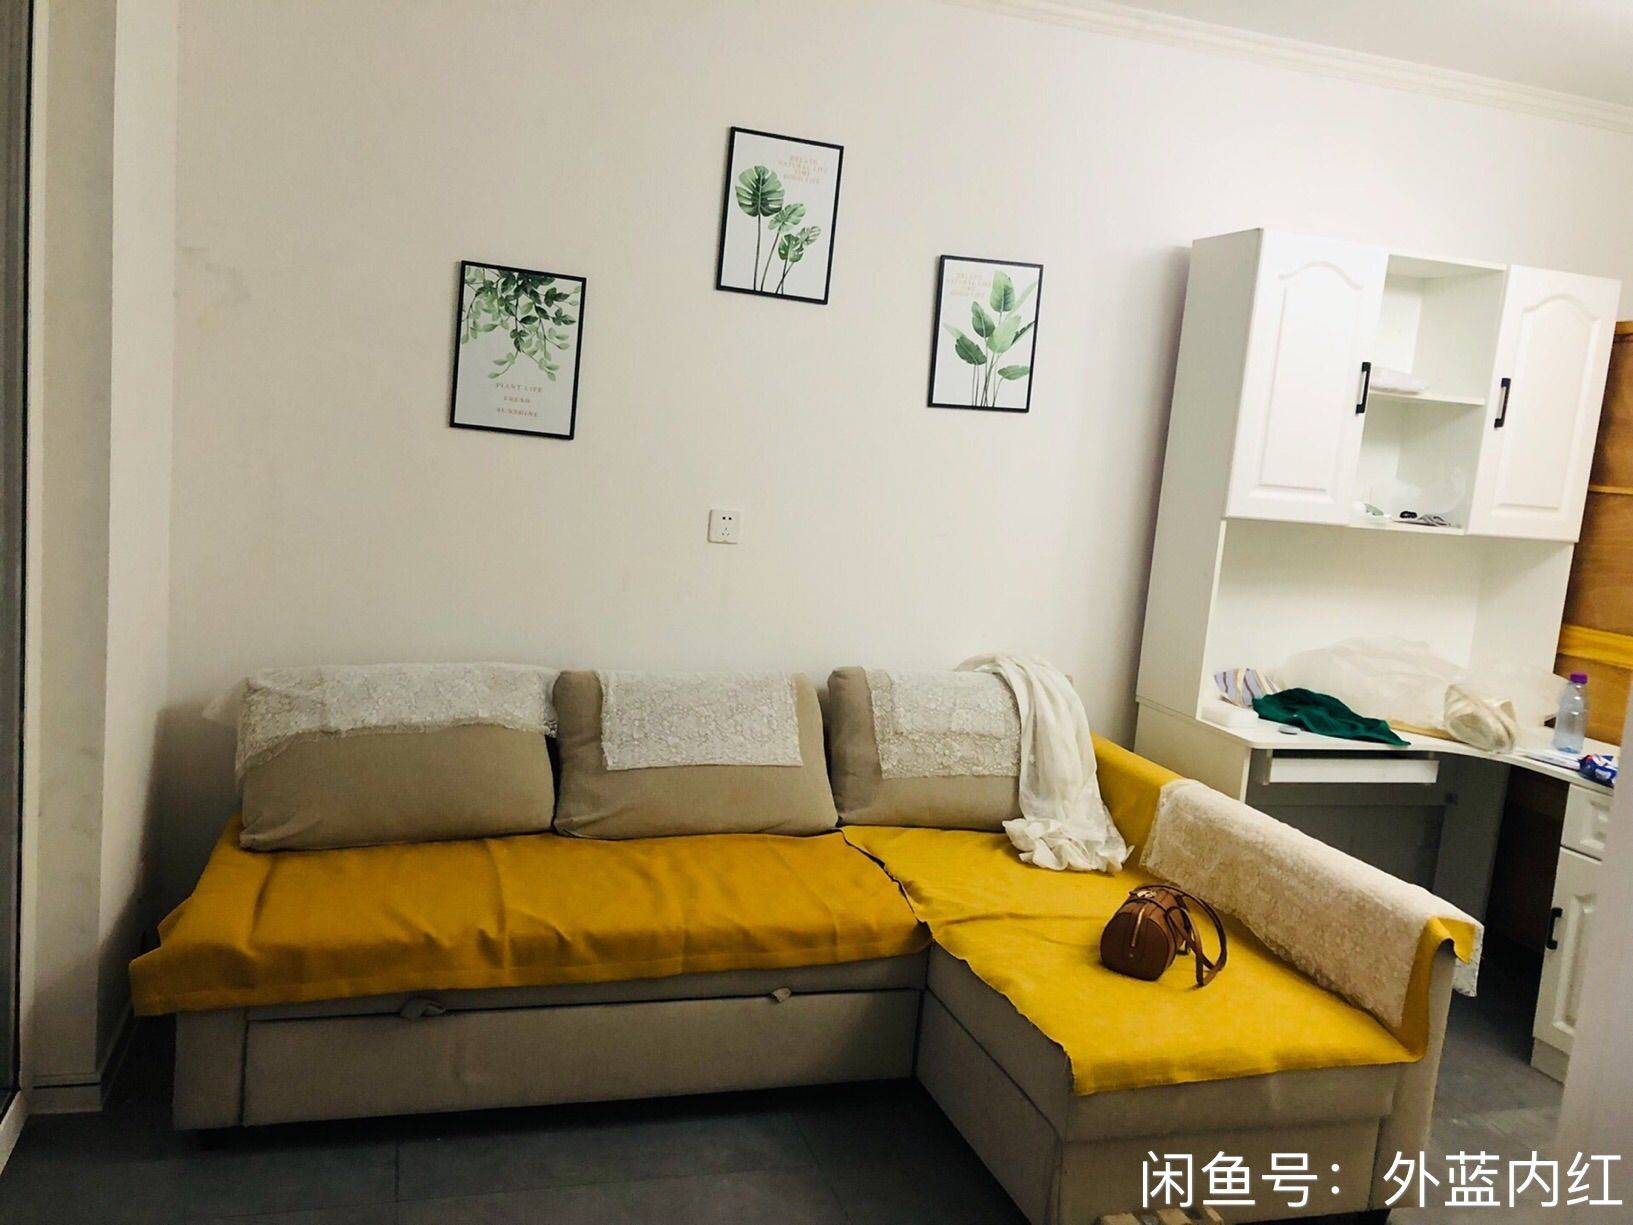 Xi'An-Yanta-Cozy Home,Clean&Comfy,No Gender Limit,Hustle & Bustle,“Friends”,Chilled,LGBTQ Friendly,Pet Friendly